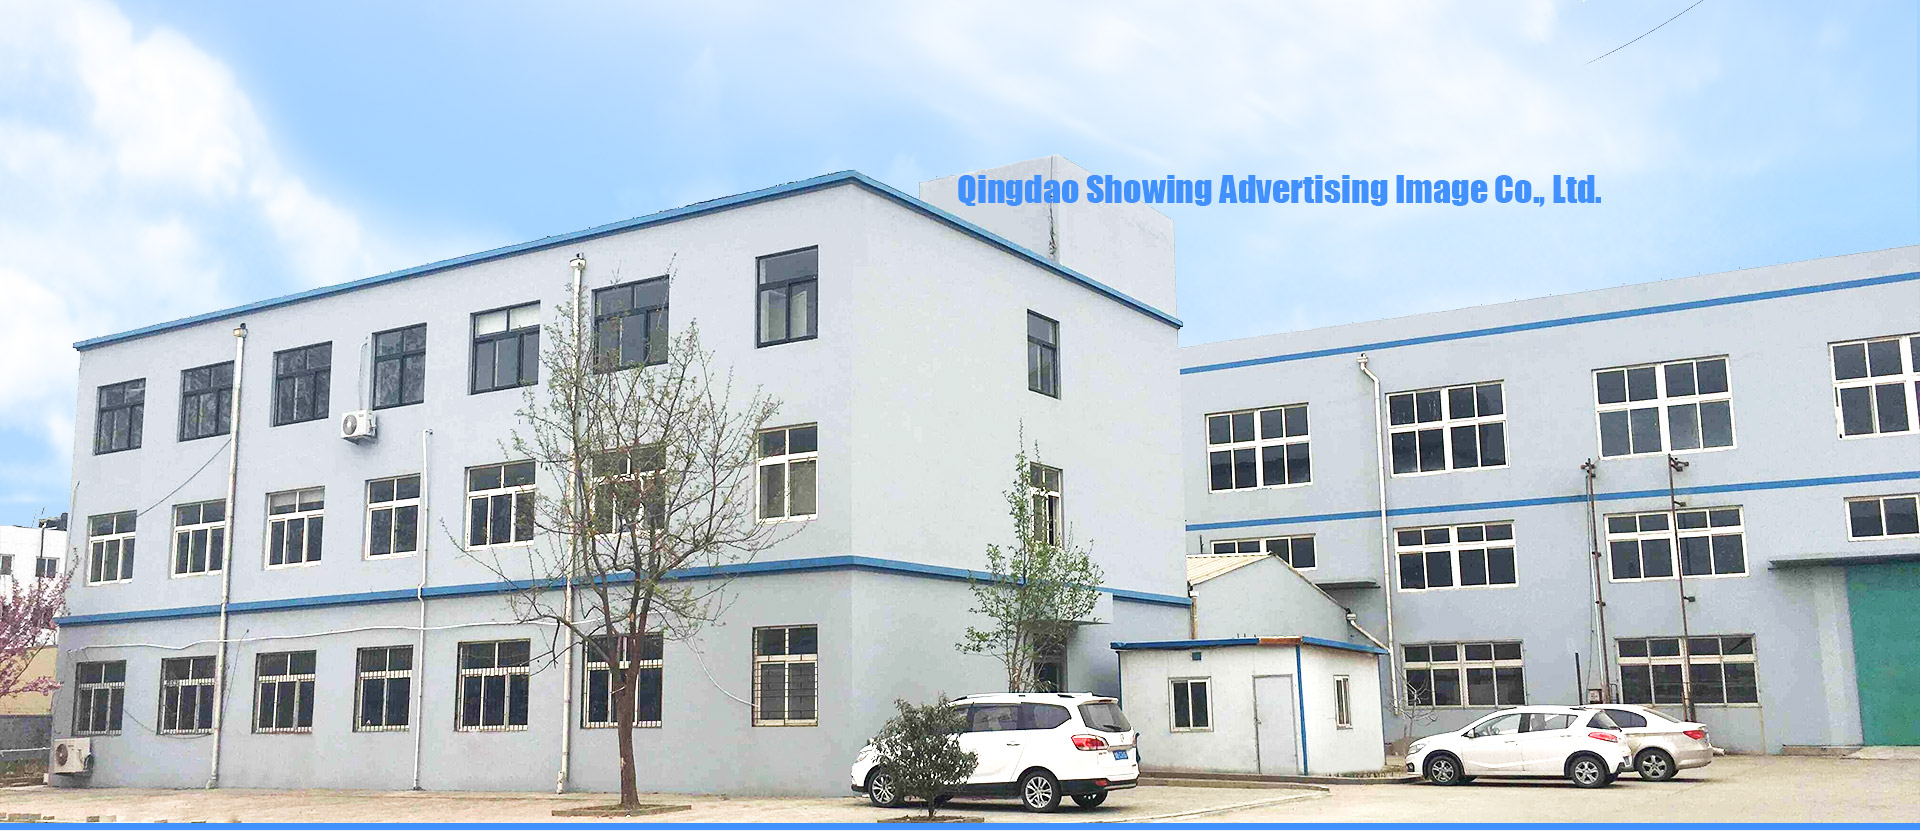 Qingdao Showing Advertising Image Co., Ltd.